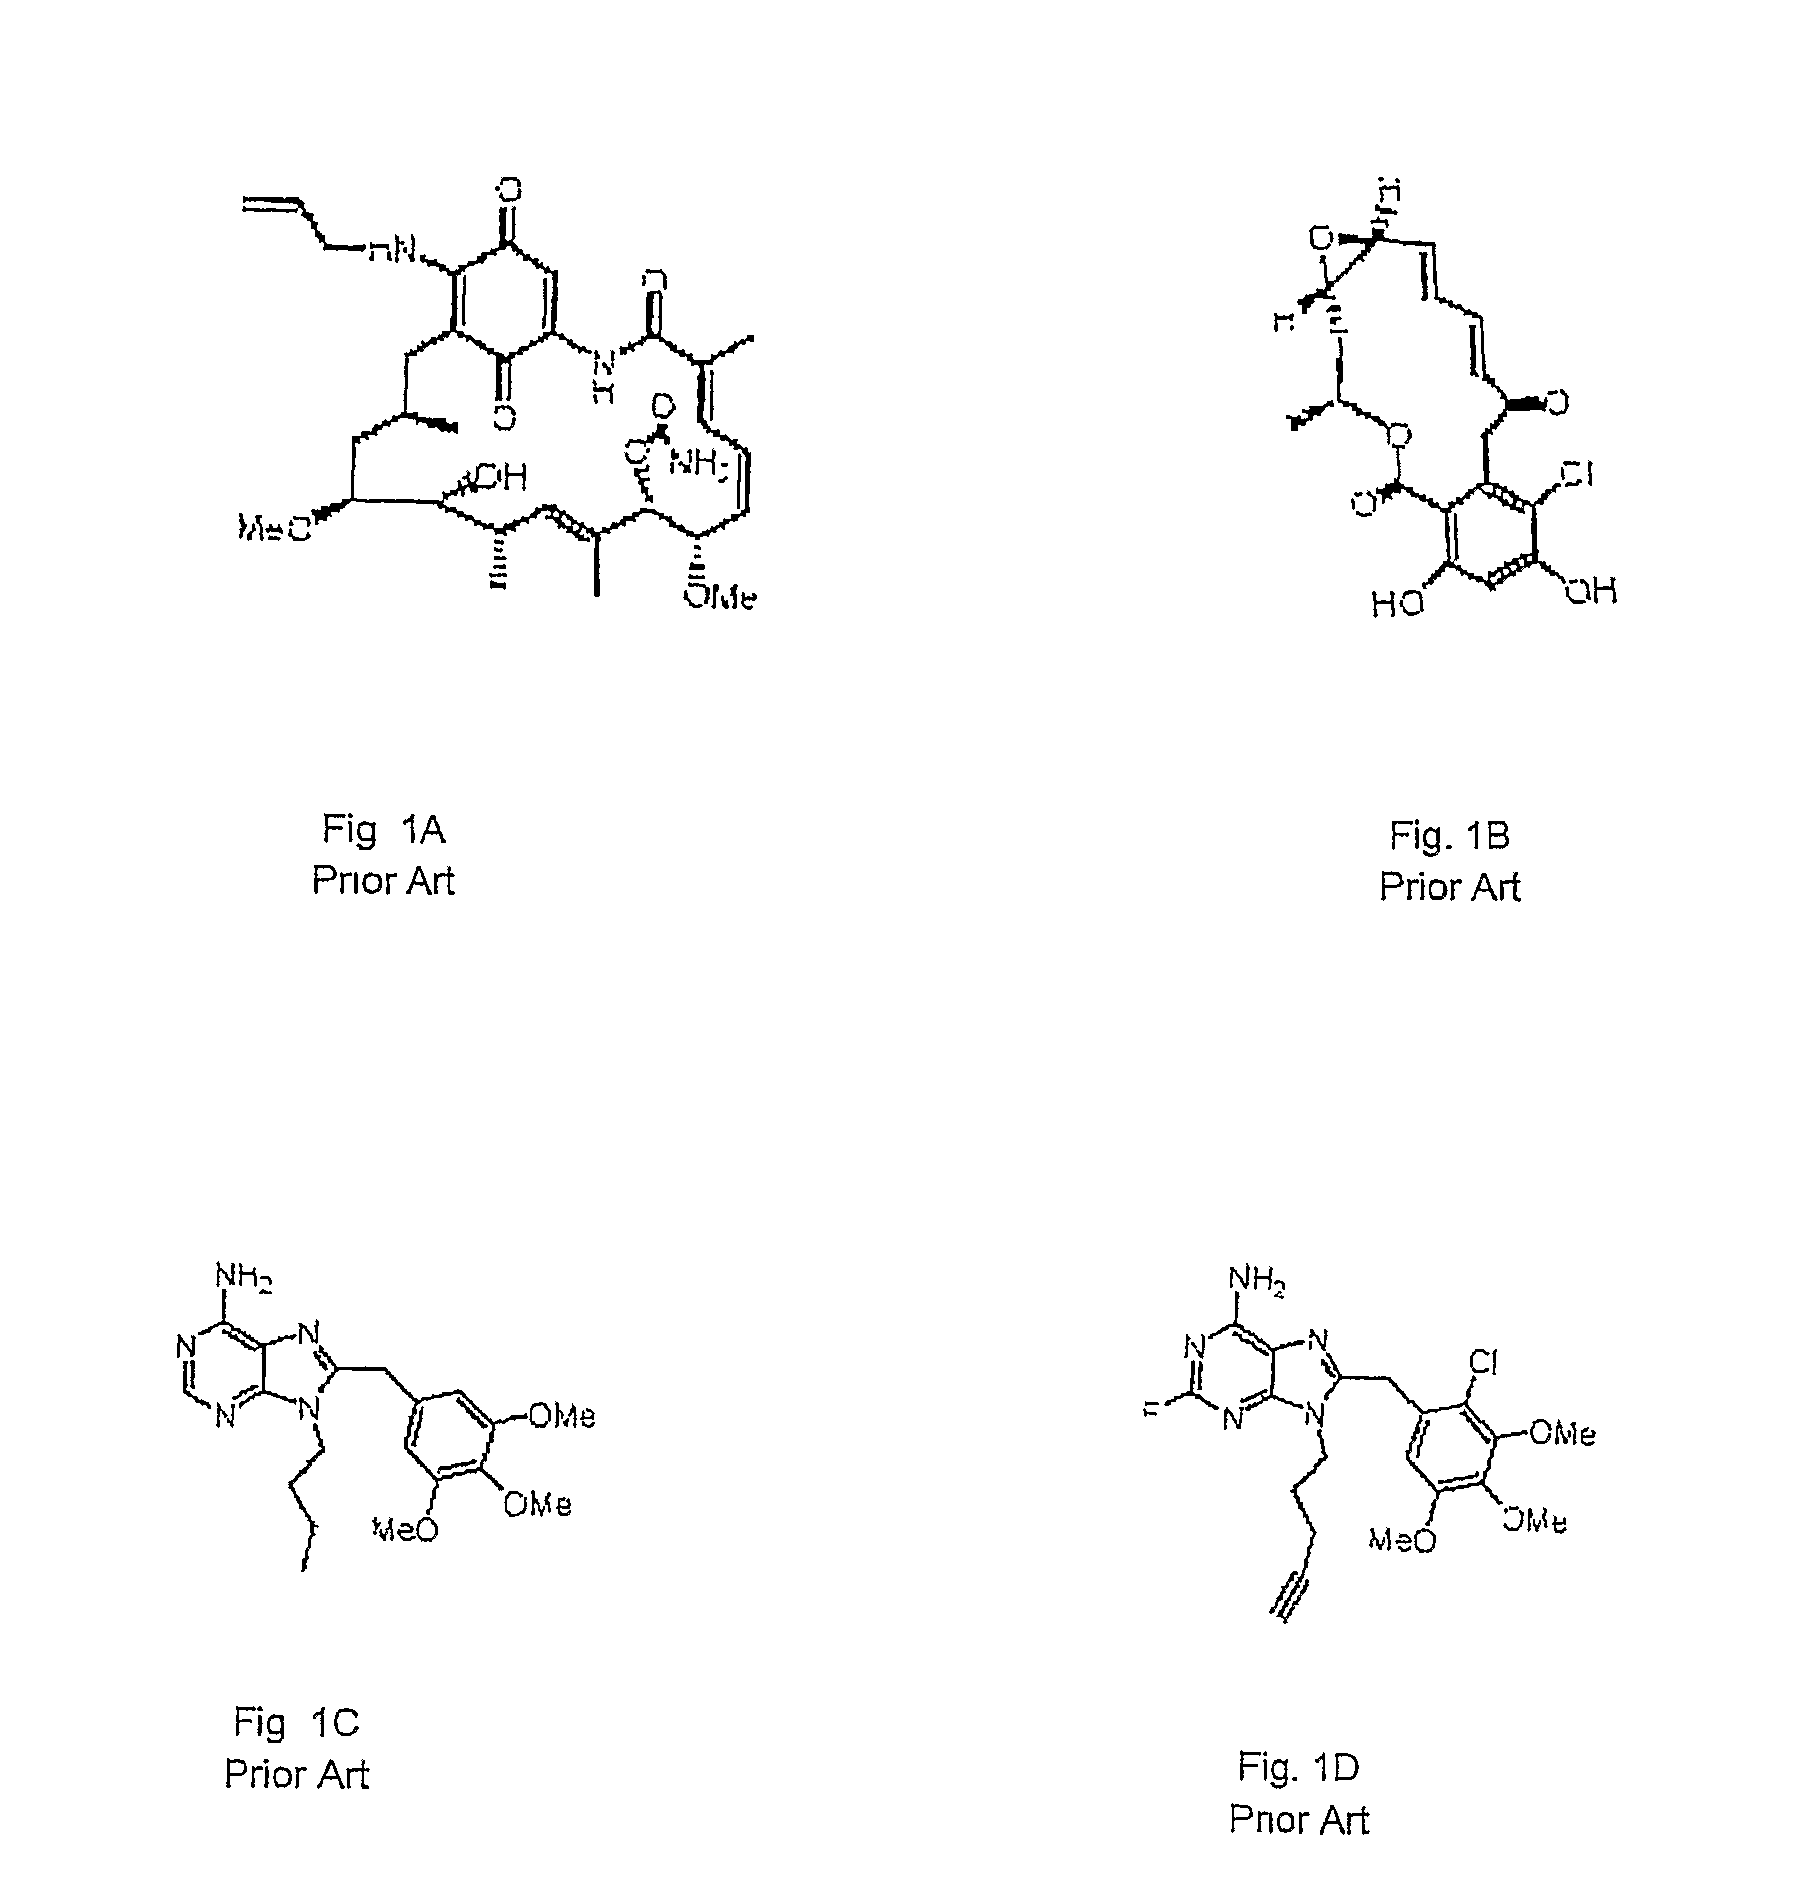 Small-Molecule Hsp90 Inhibitors